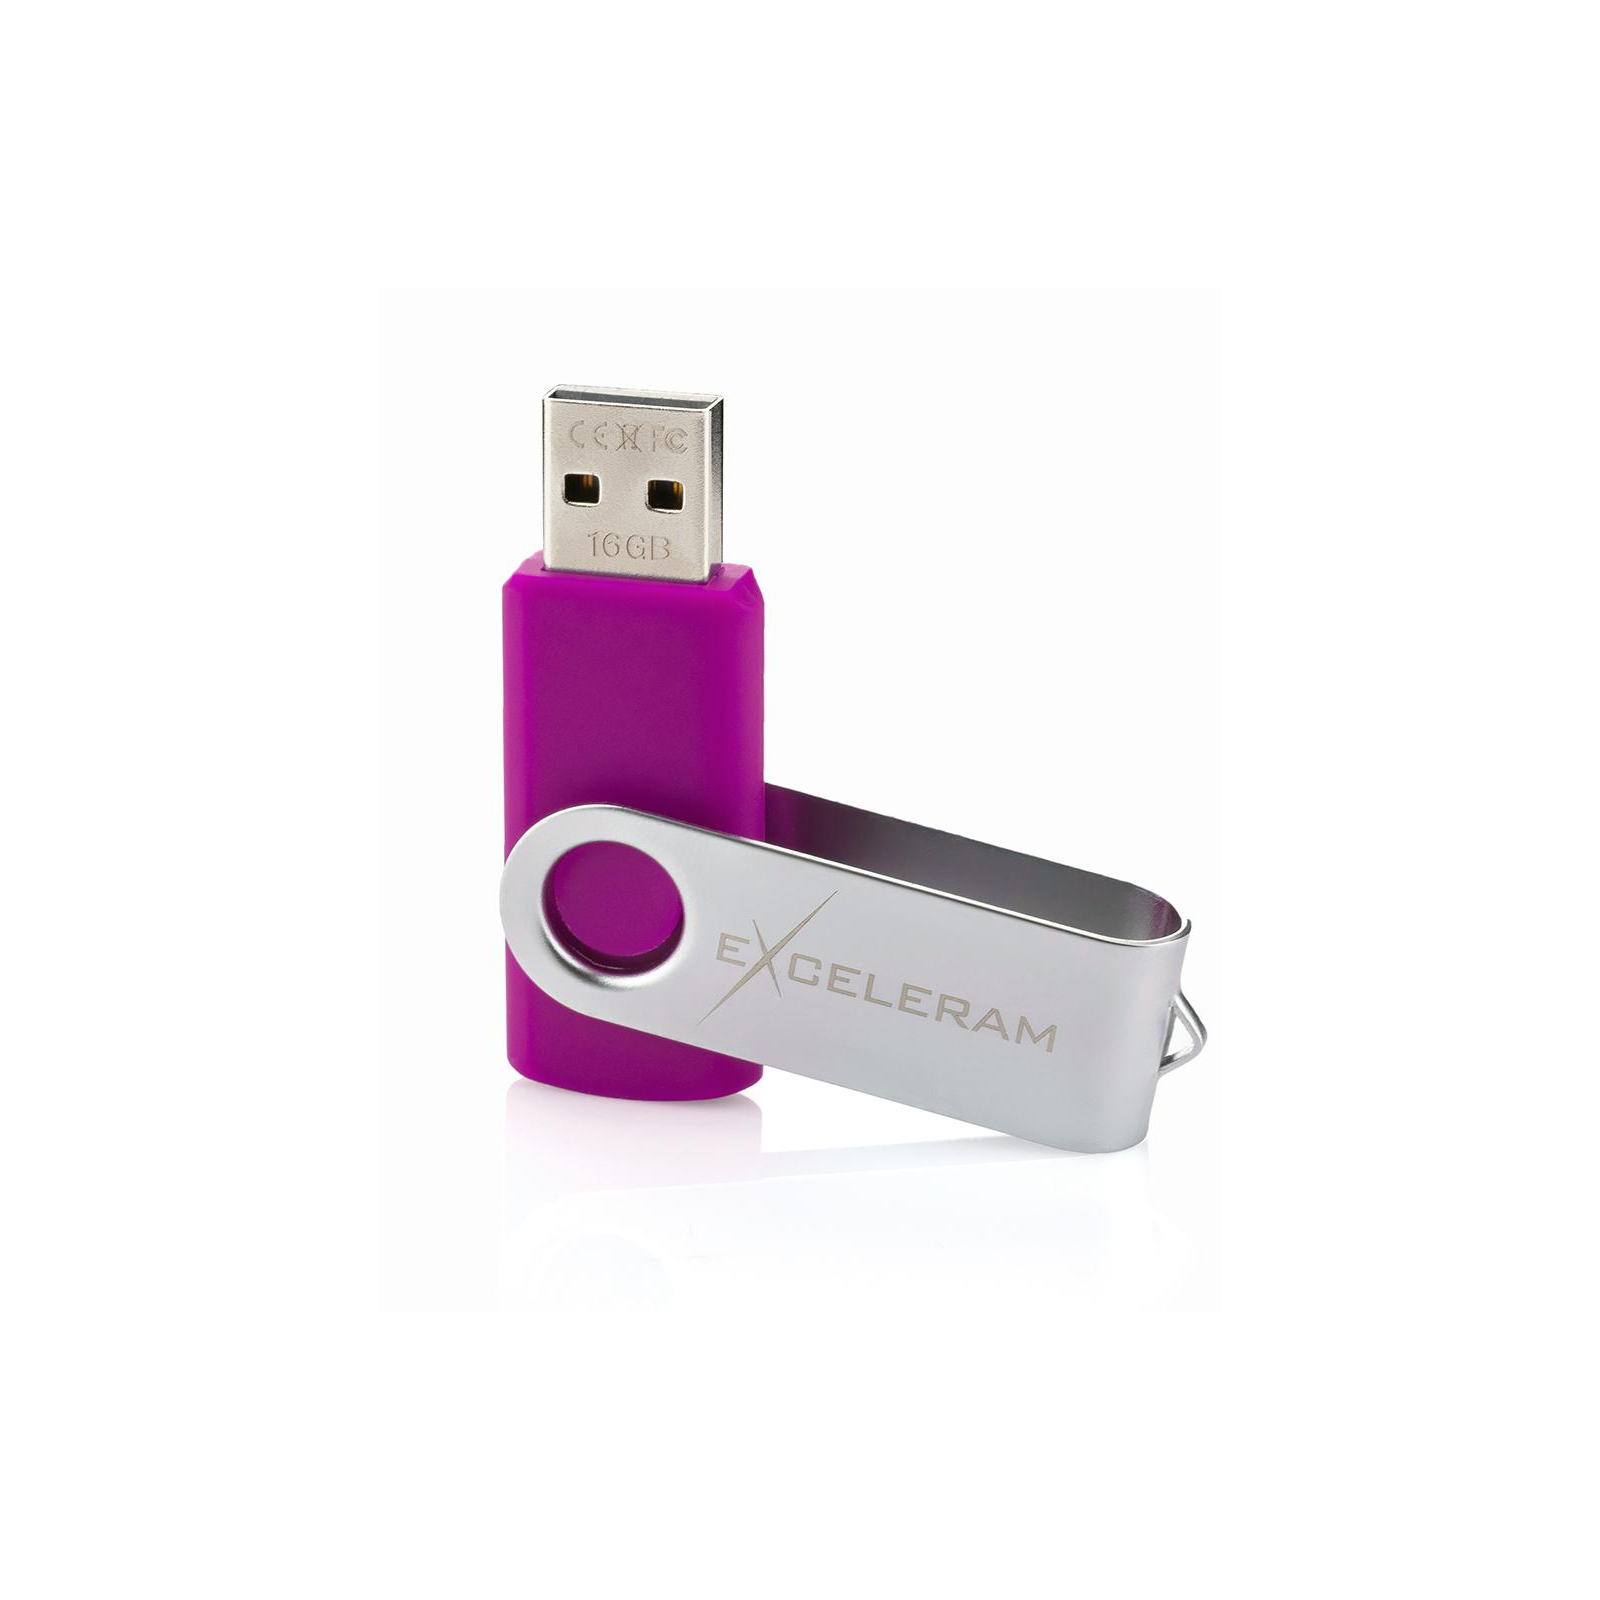 USB флеш накопитель eXceleram 8GB P1 Series Silver/Purple USB 2.0 (EXP1U2SIPU08) изображение 3